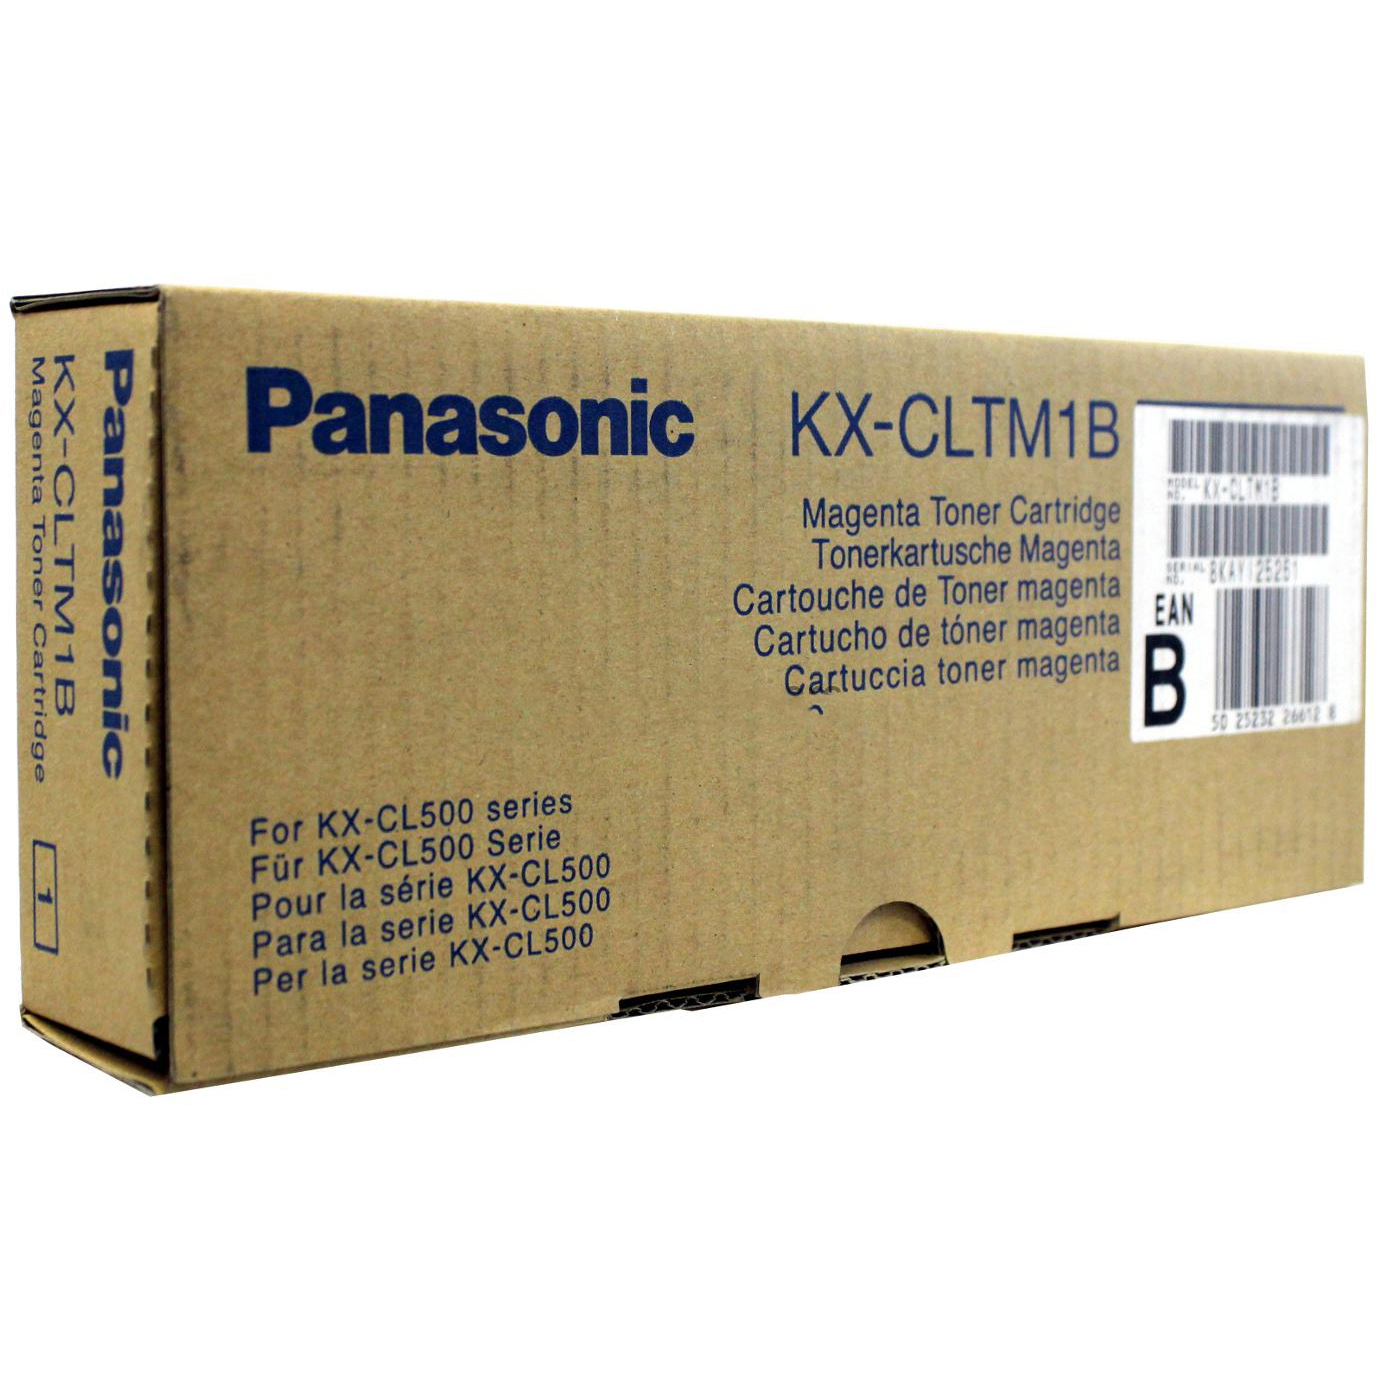 Original Panasonic KX-CLTM1B Magenta Toner Cartridge (KXCLTM1B)